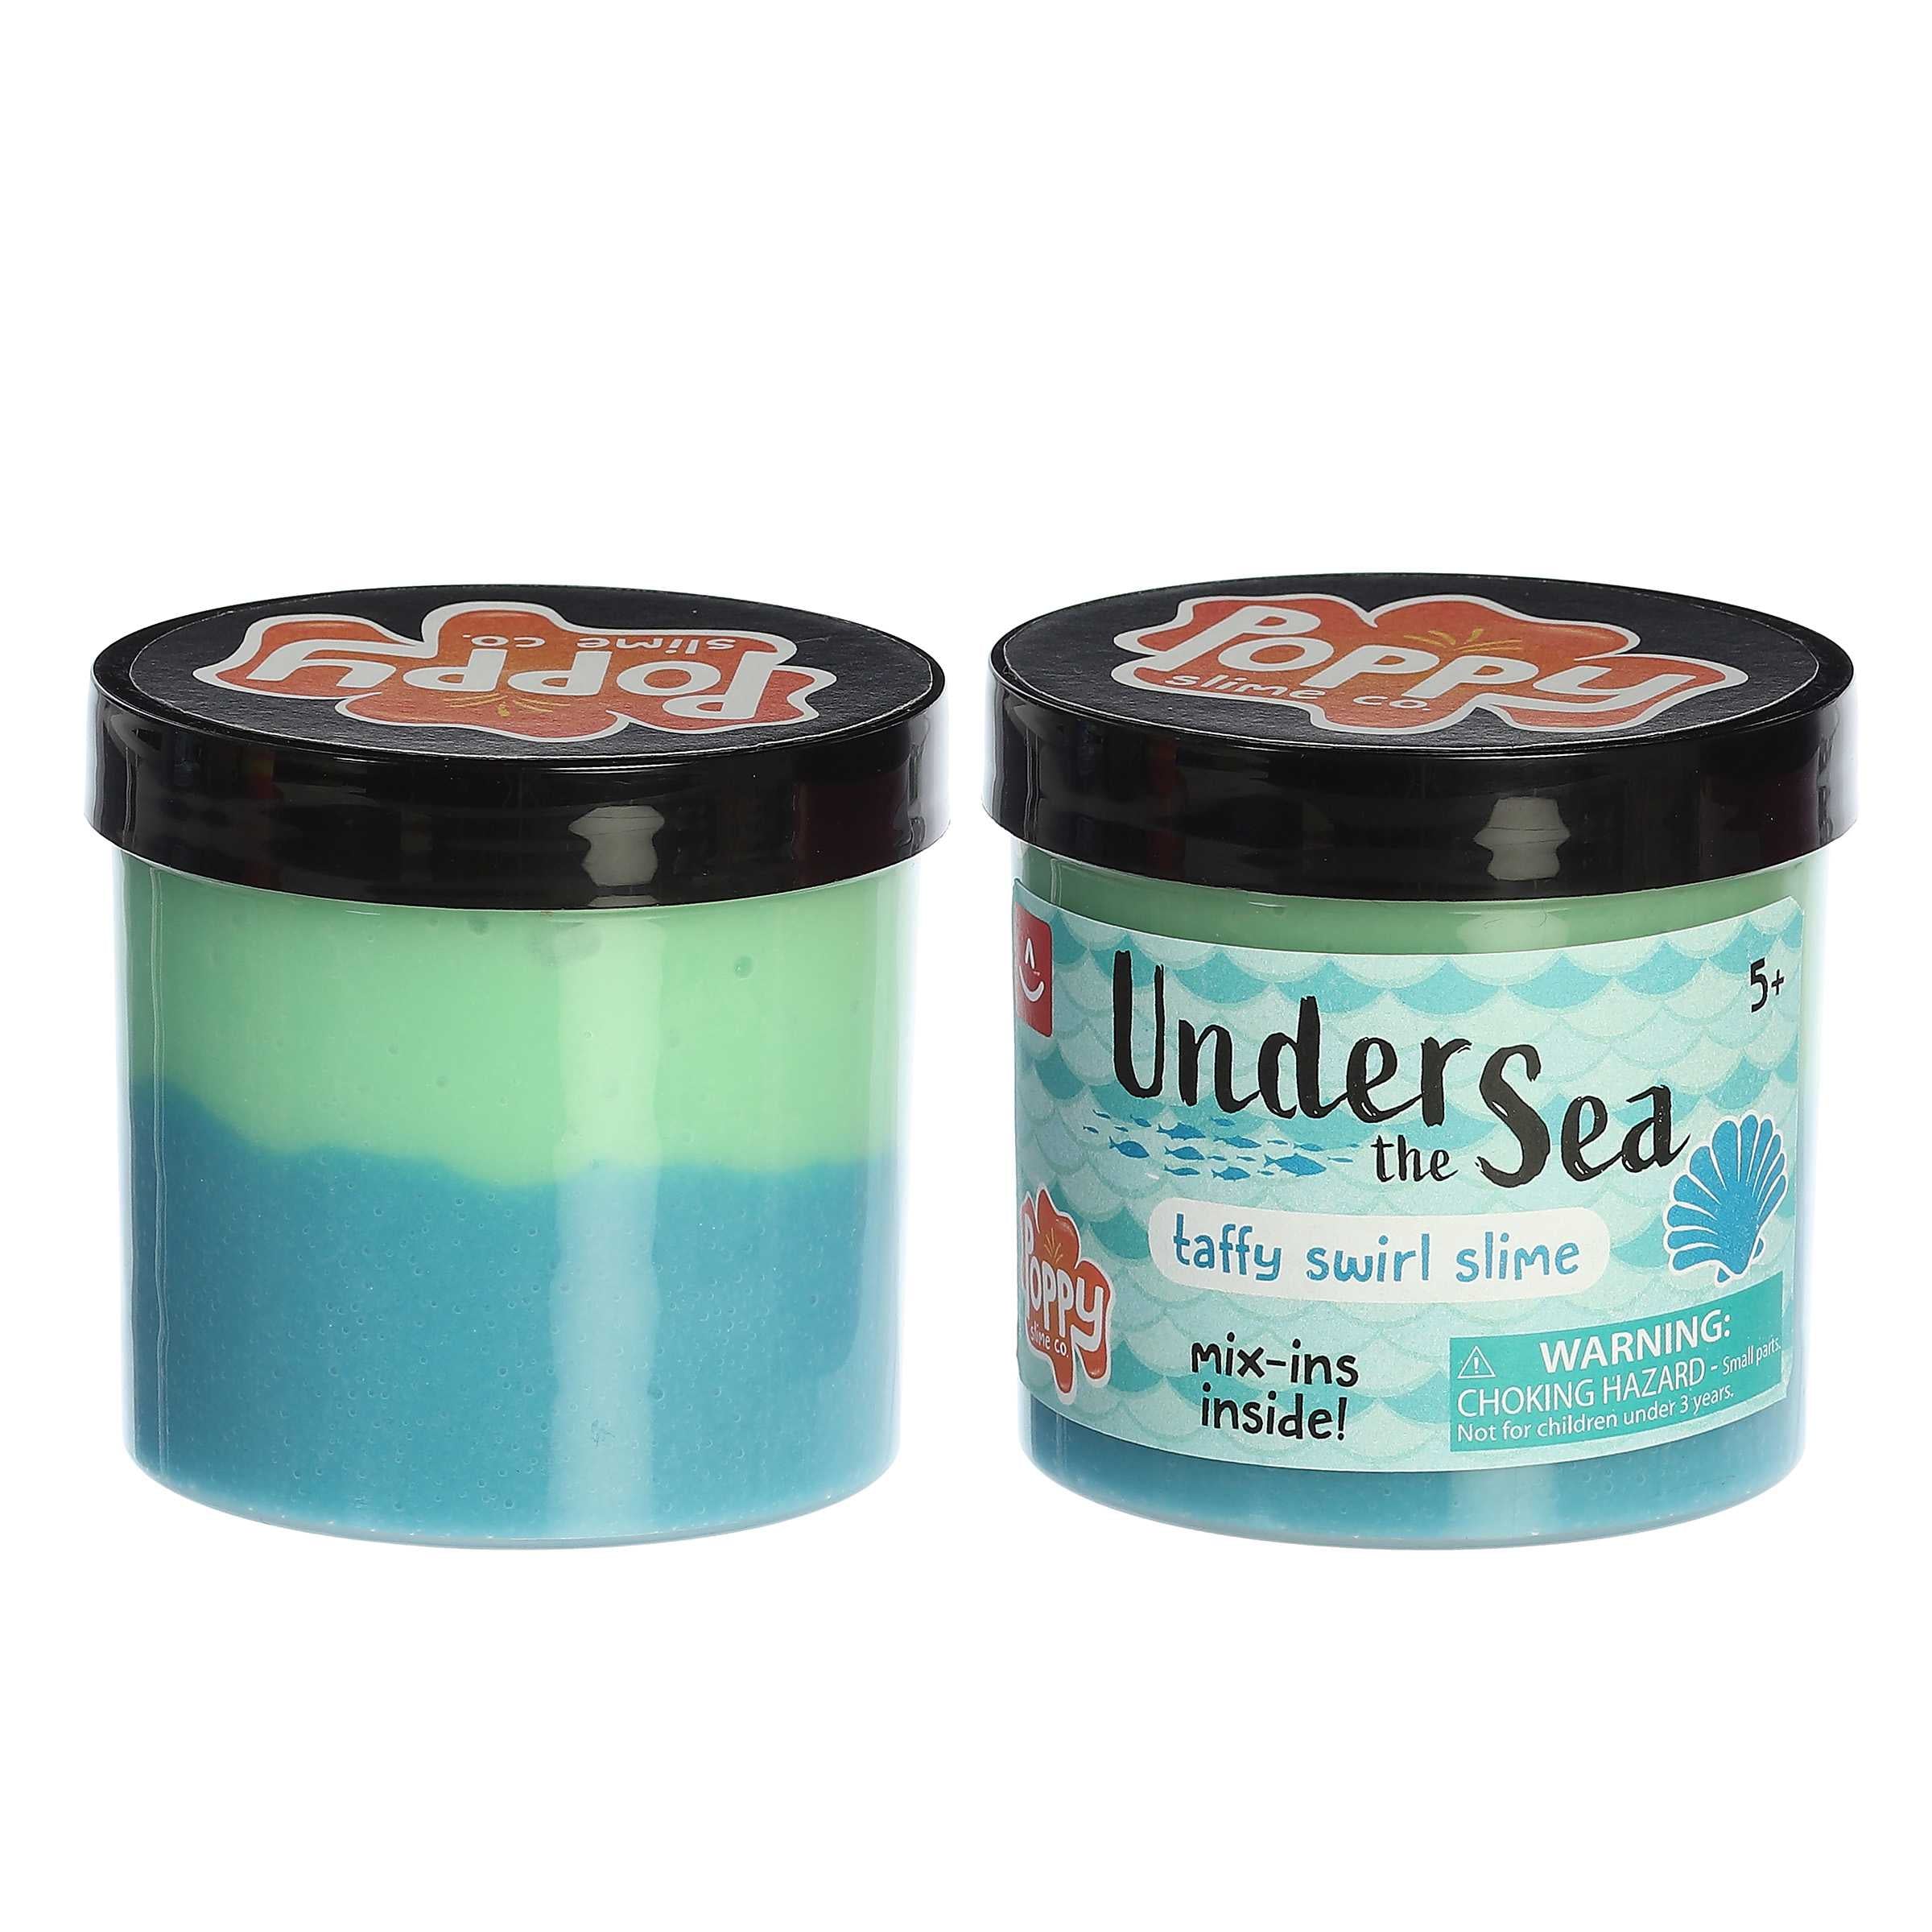 Aurora® Toys - Poppy Slime Co.™ - Under The Sea Slime